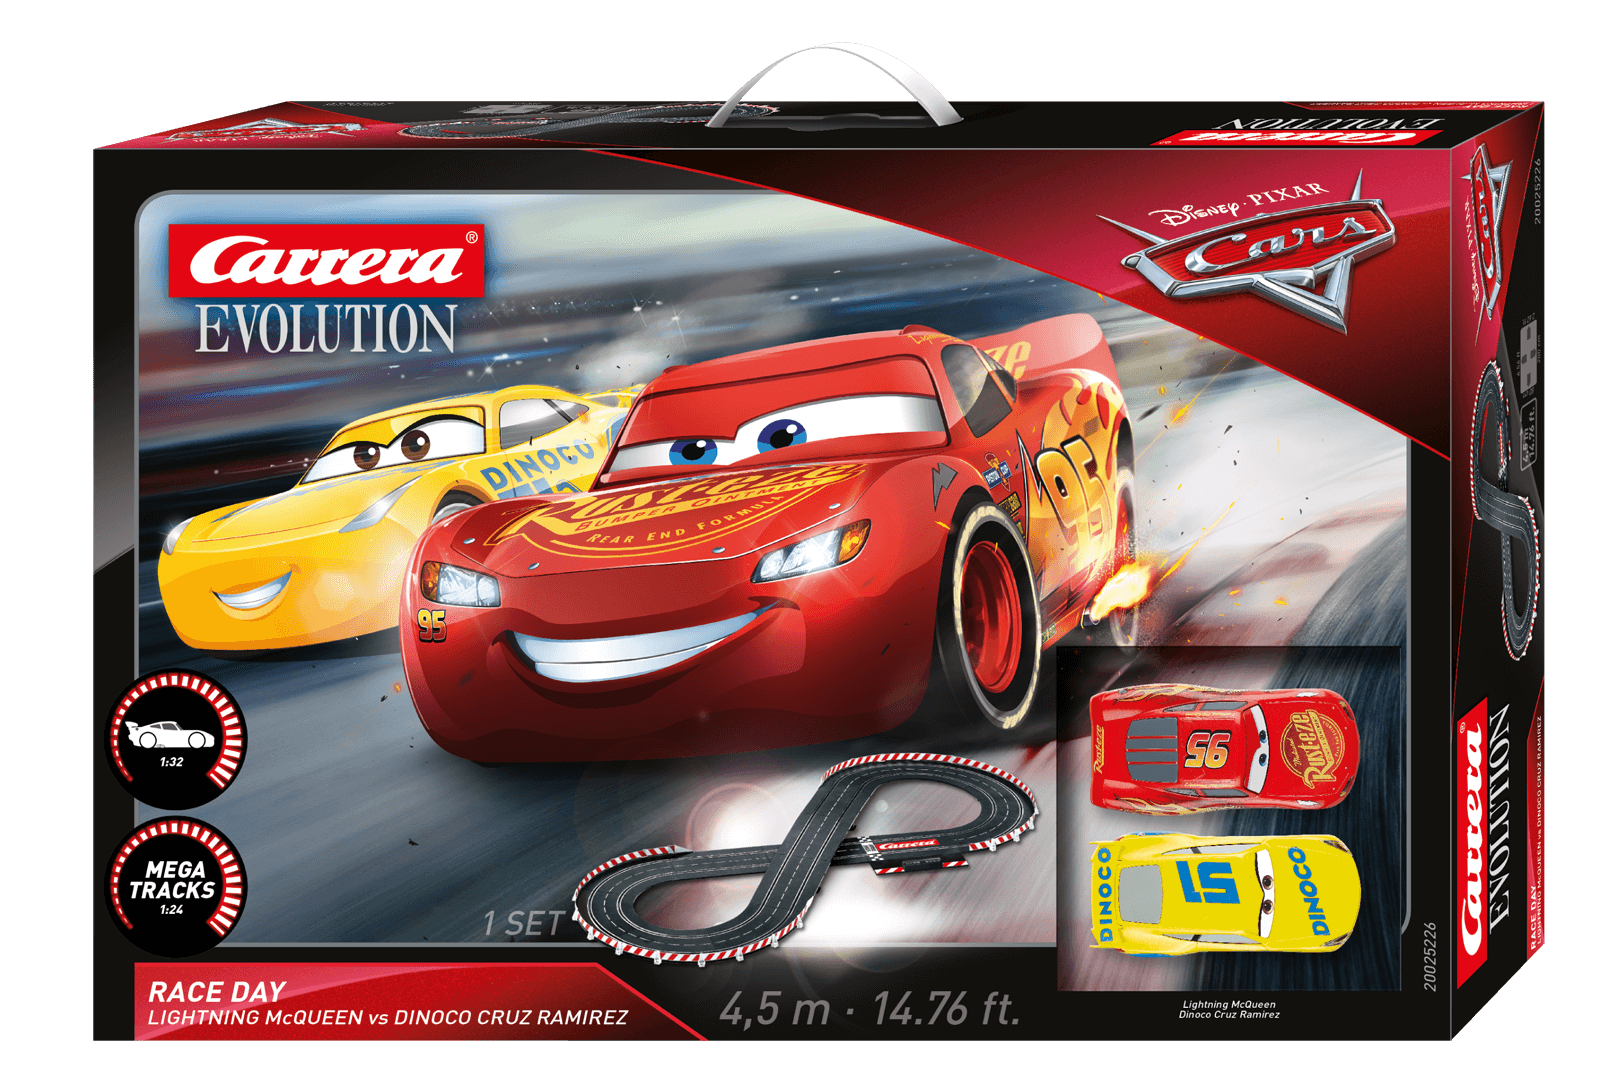 2x NEW DHL  Vinyl Decals F1 Race Slotcar trackside Scalextric Carrera SCX 